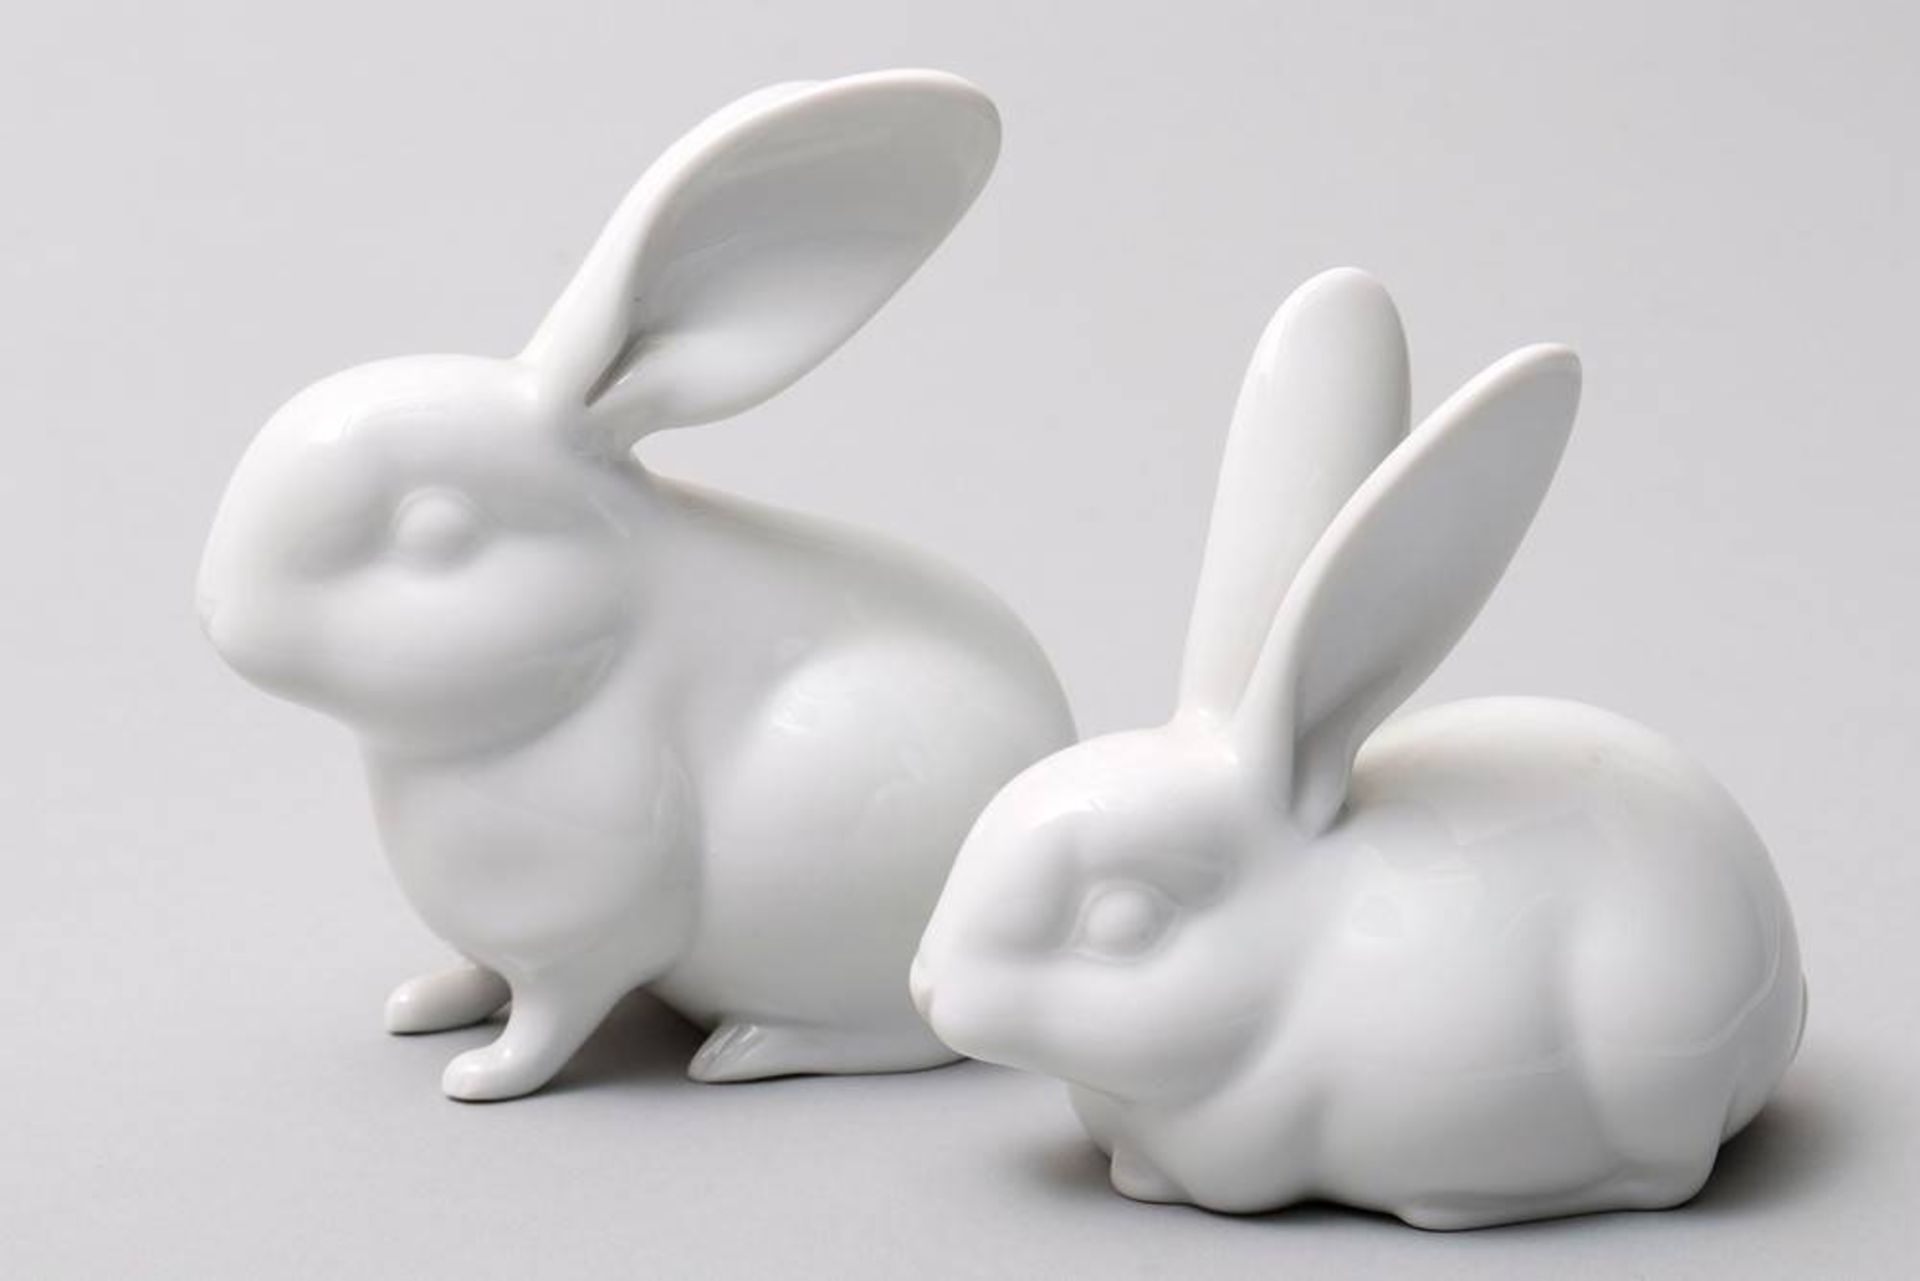 2 rabbits KPM Berlin, 20th C., glazed porcelain, 1 seated and 1 reclining rabbit, sceptre mark, H